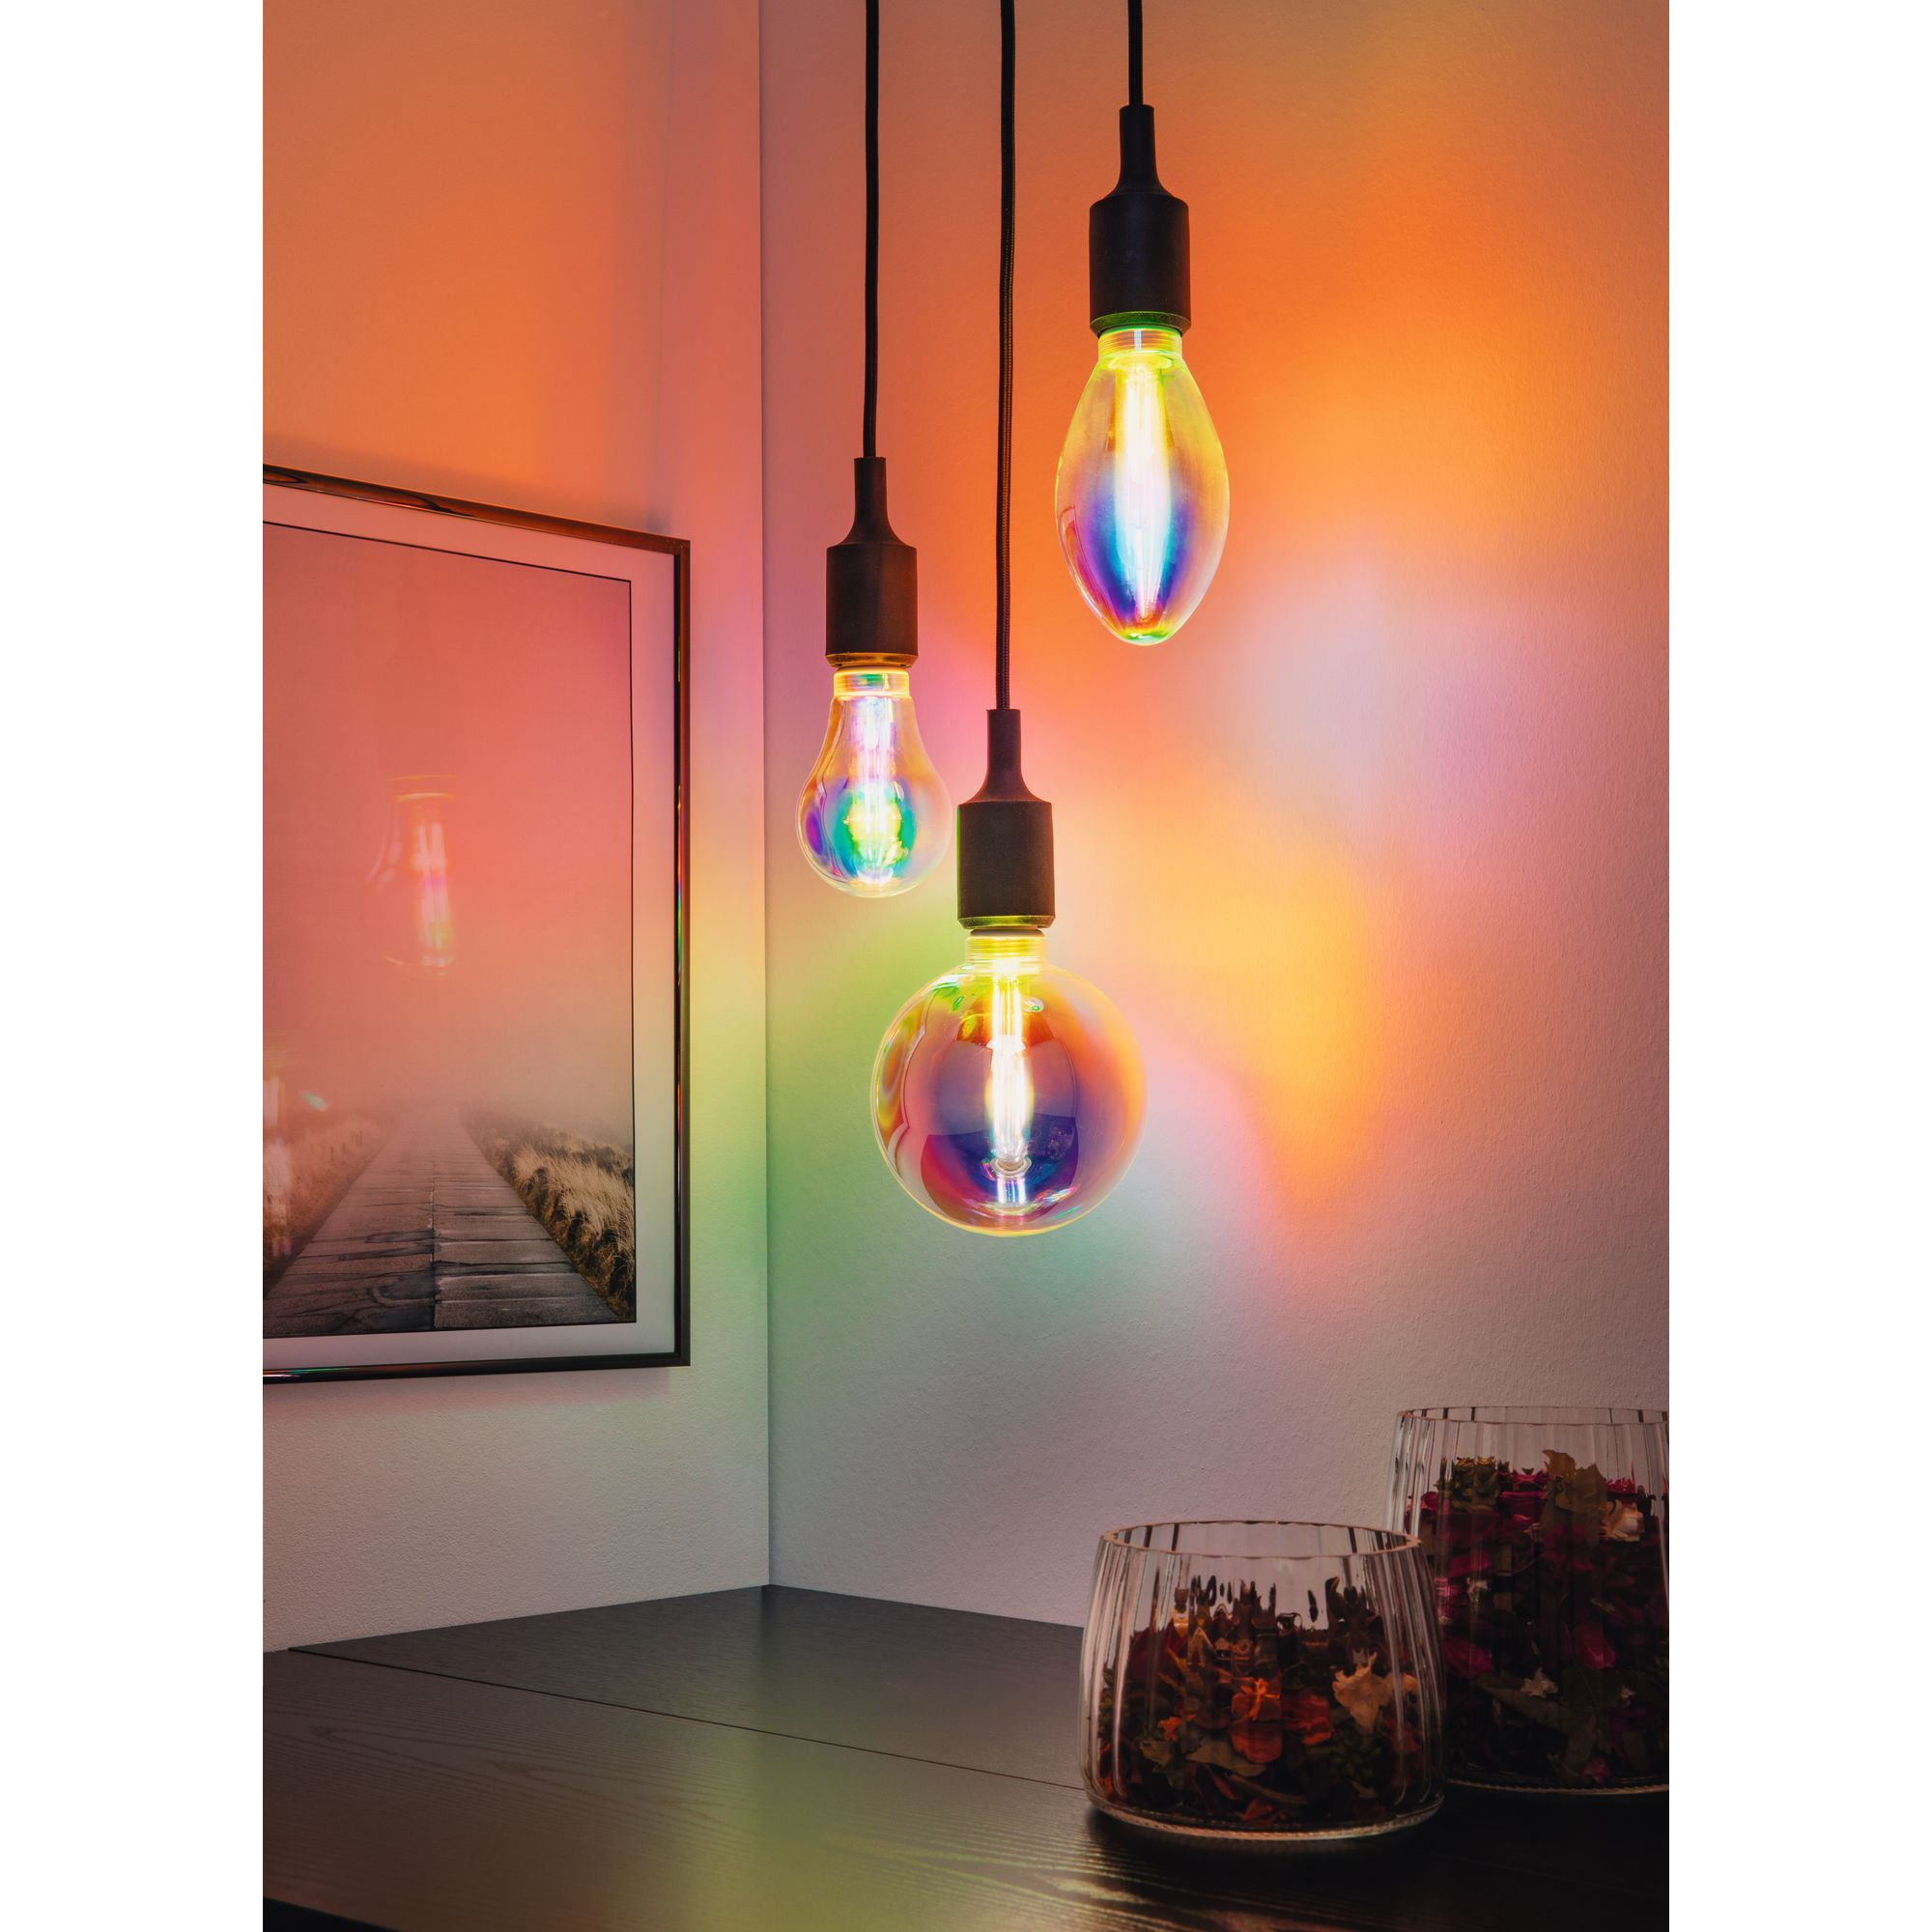 LED-Lampe E27 5W (40W) 470 lm spektraleffekt + product picture